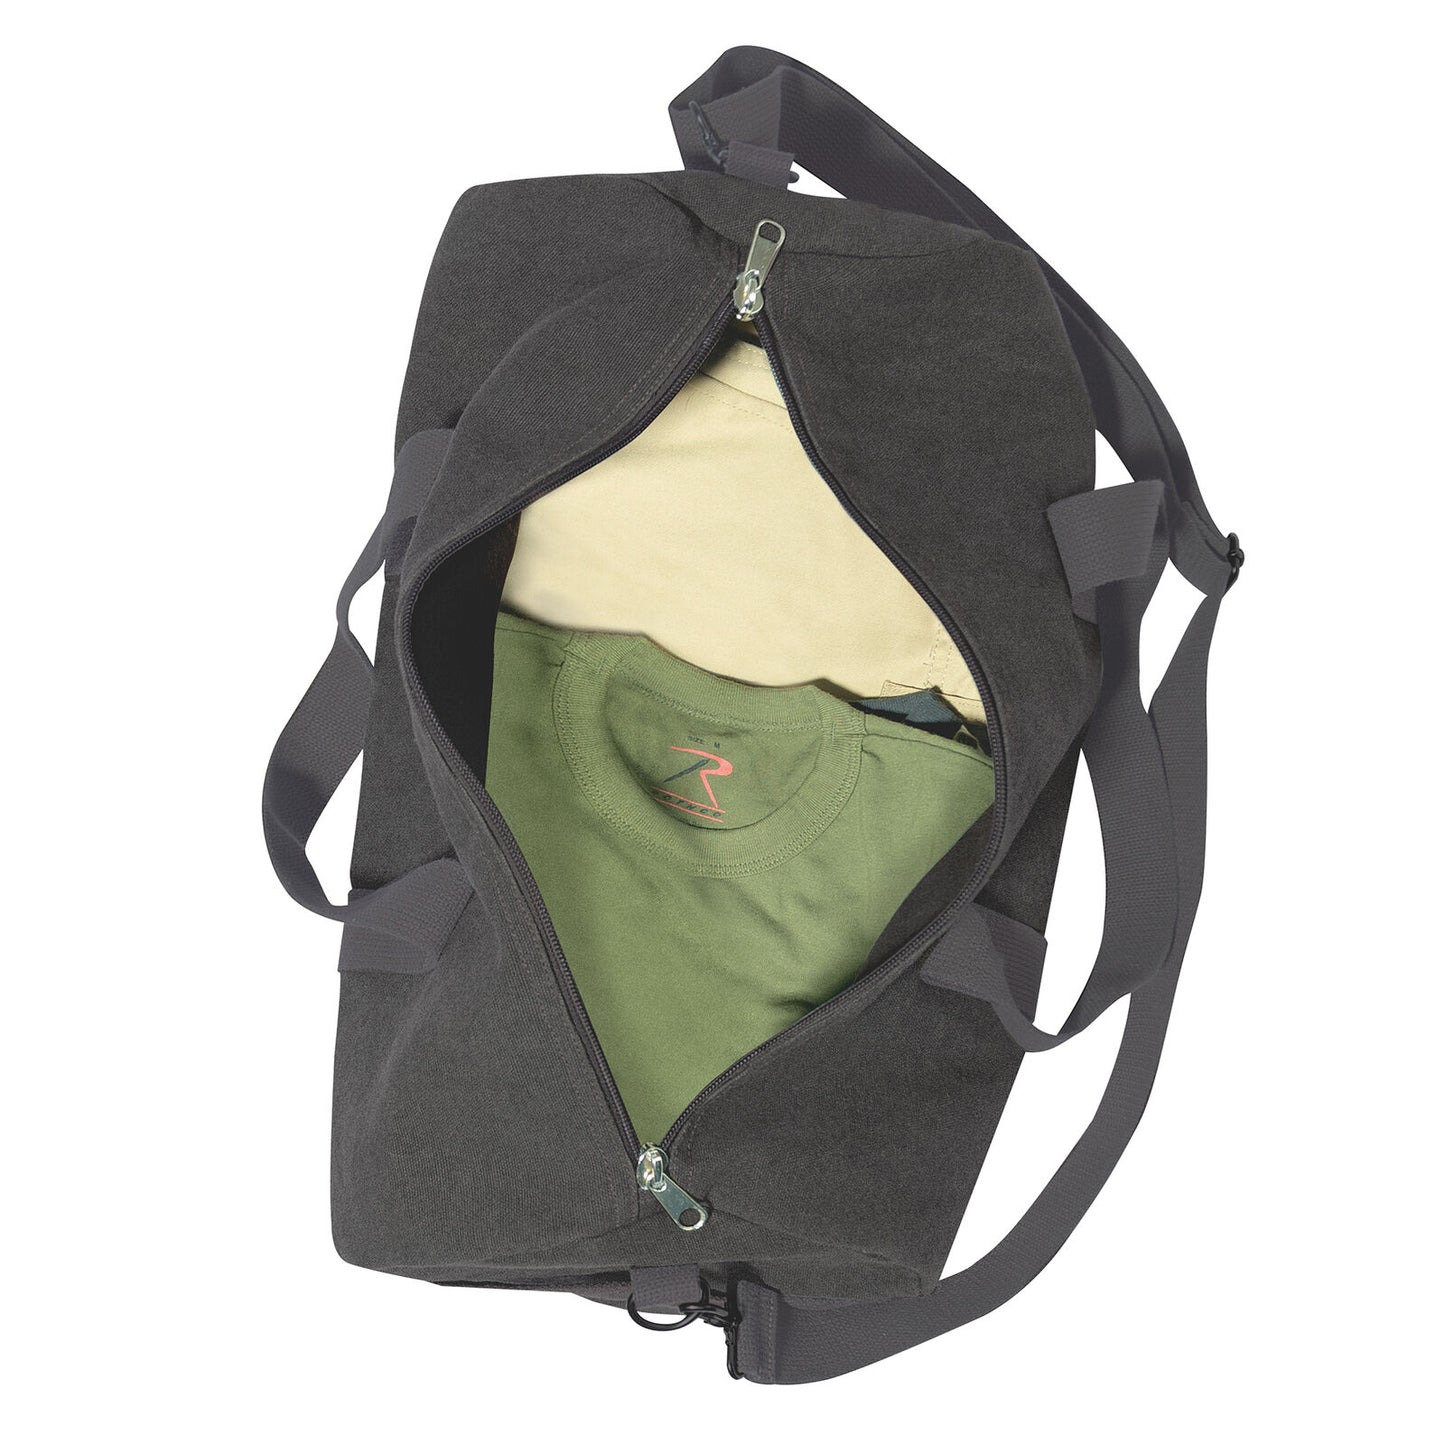 Charocal Grey Canvas Shoulder Duffle Bag - 19 Inch Unisex Travel Gear Bag